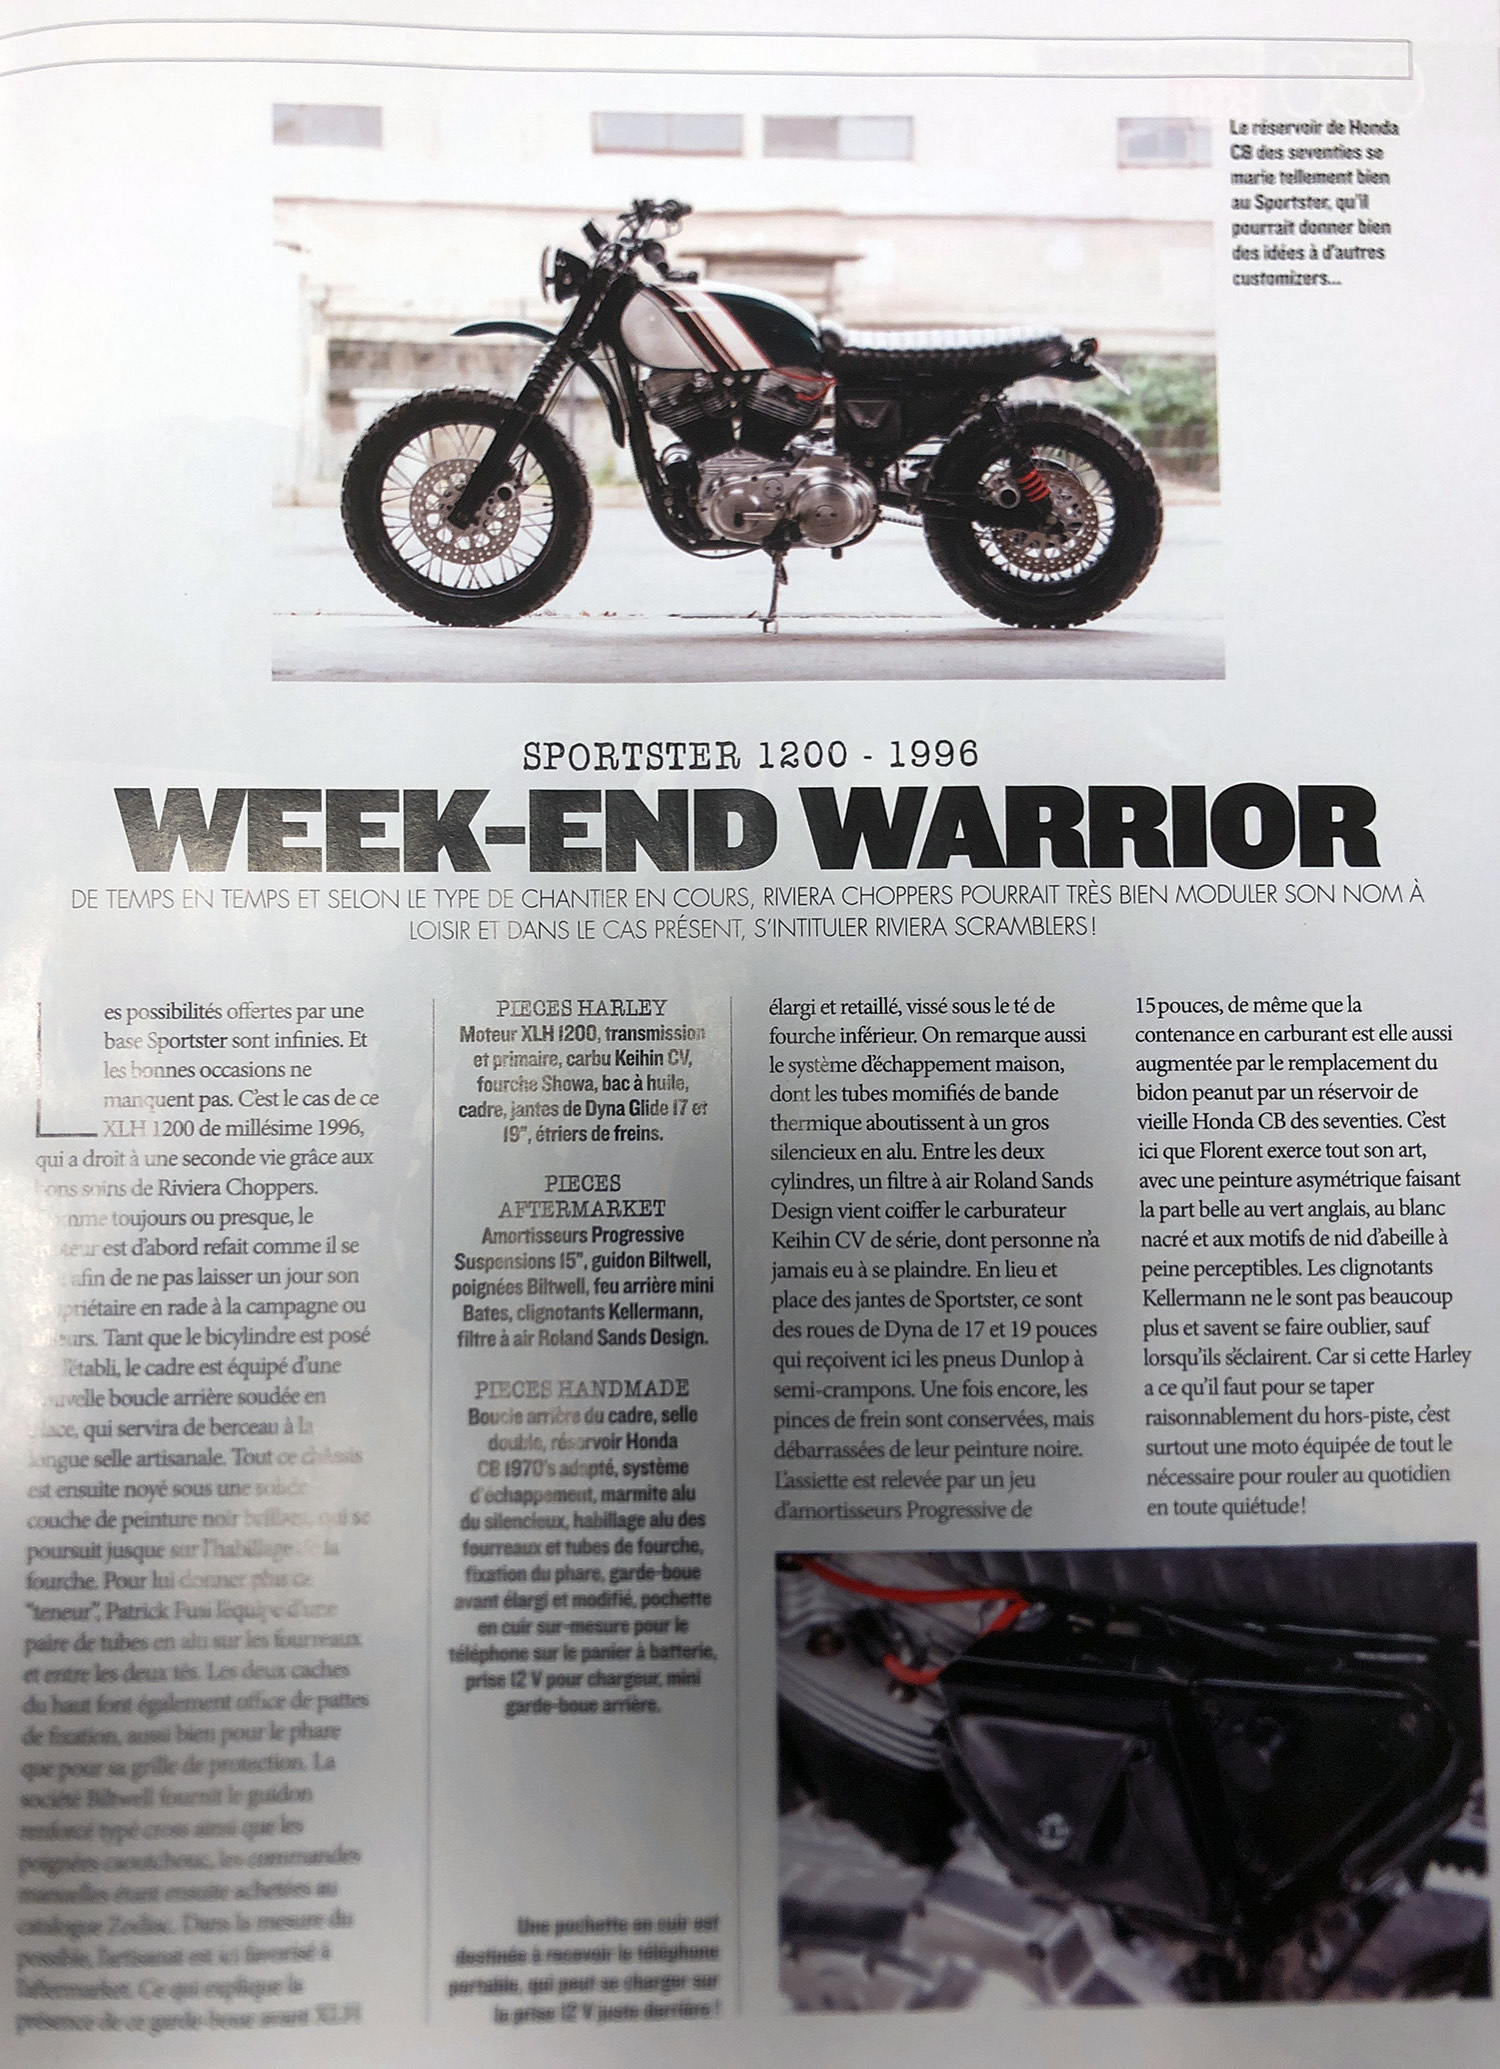 harley_Davidson_sportster_cezanne_classic_motorcycle_6-85.jpg